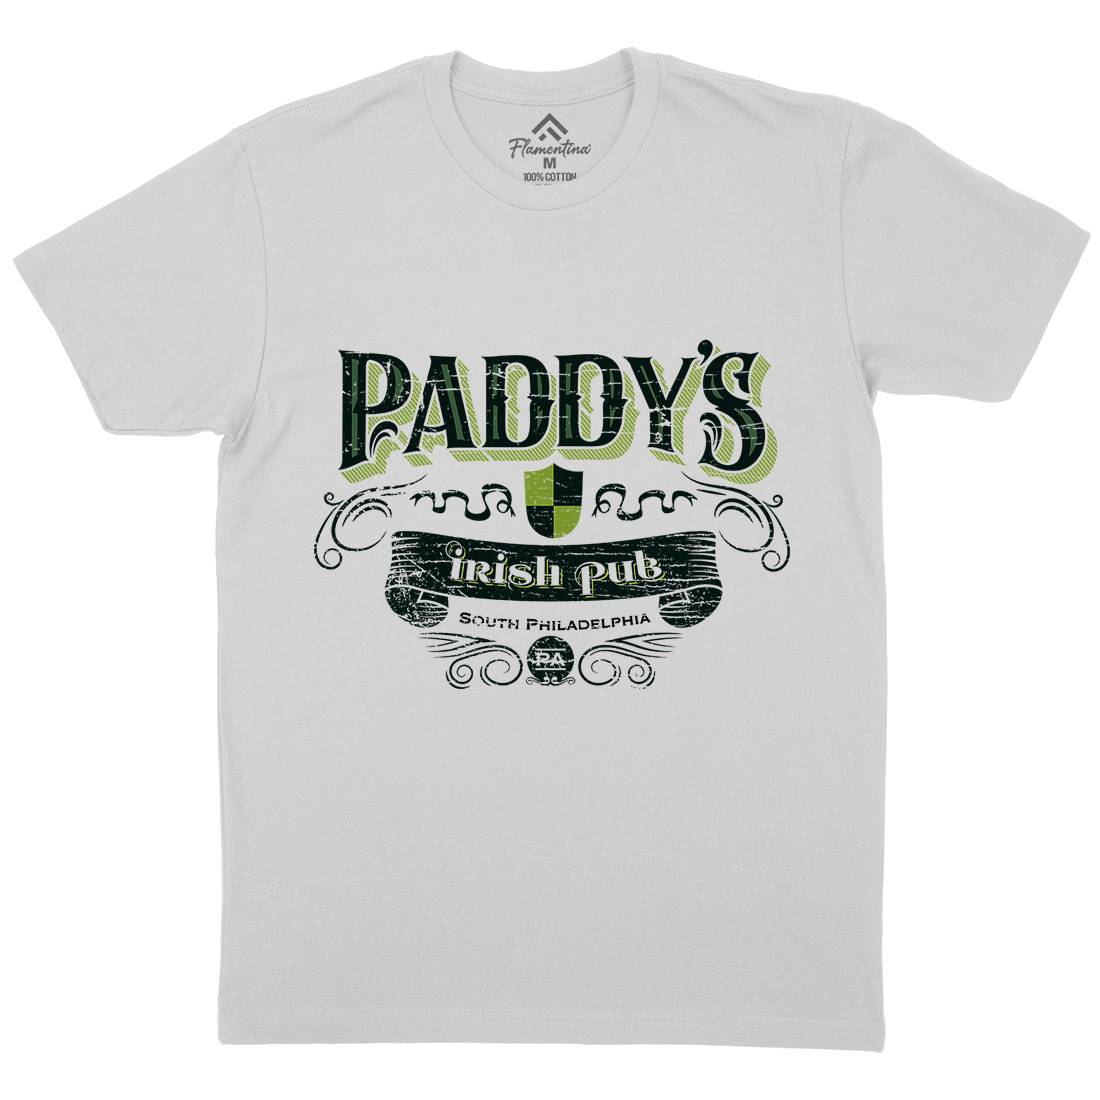 Paddys Irish Pub Mens Crew Neck T-Shirt Drinks D246